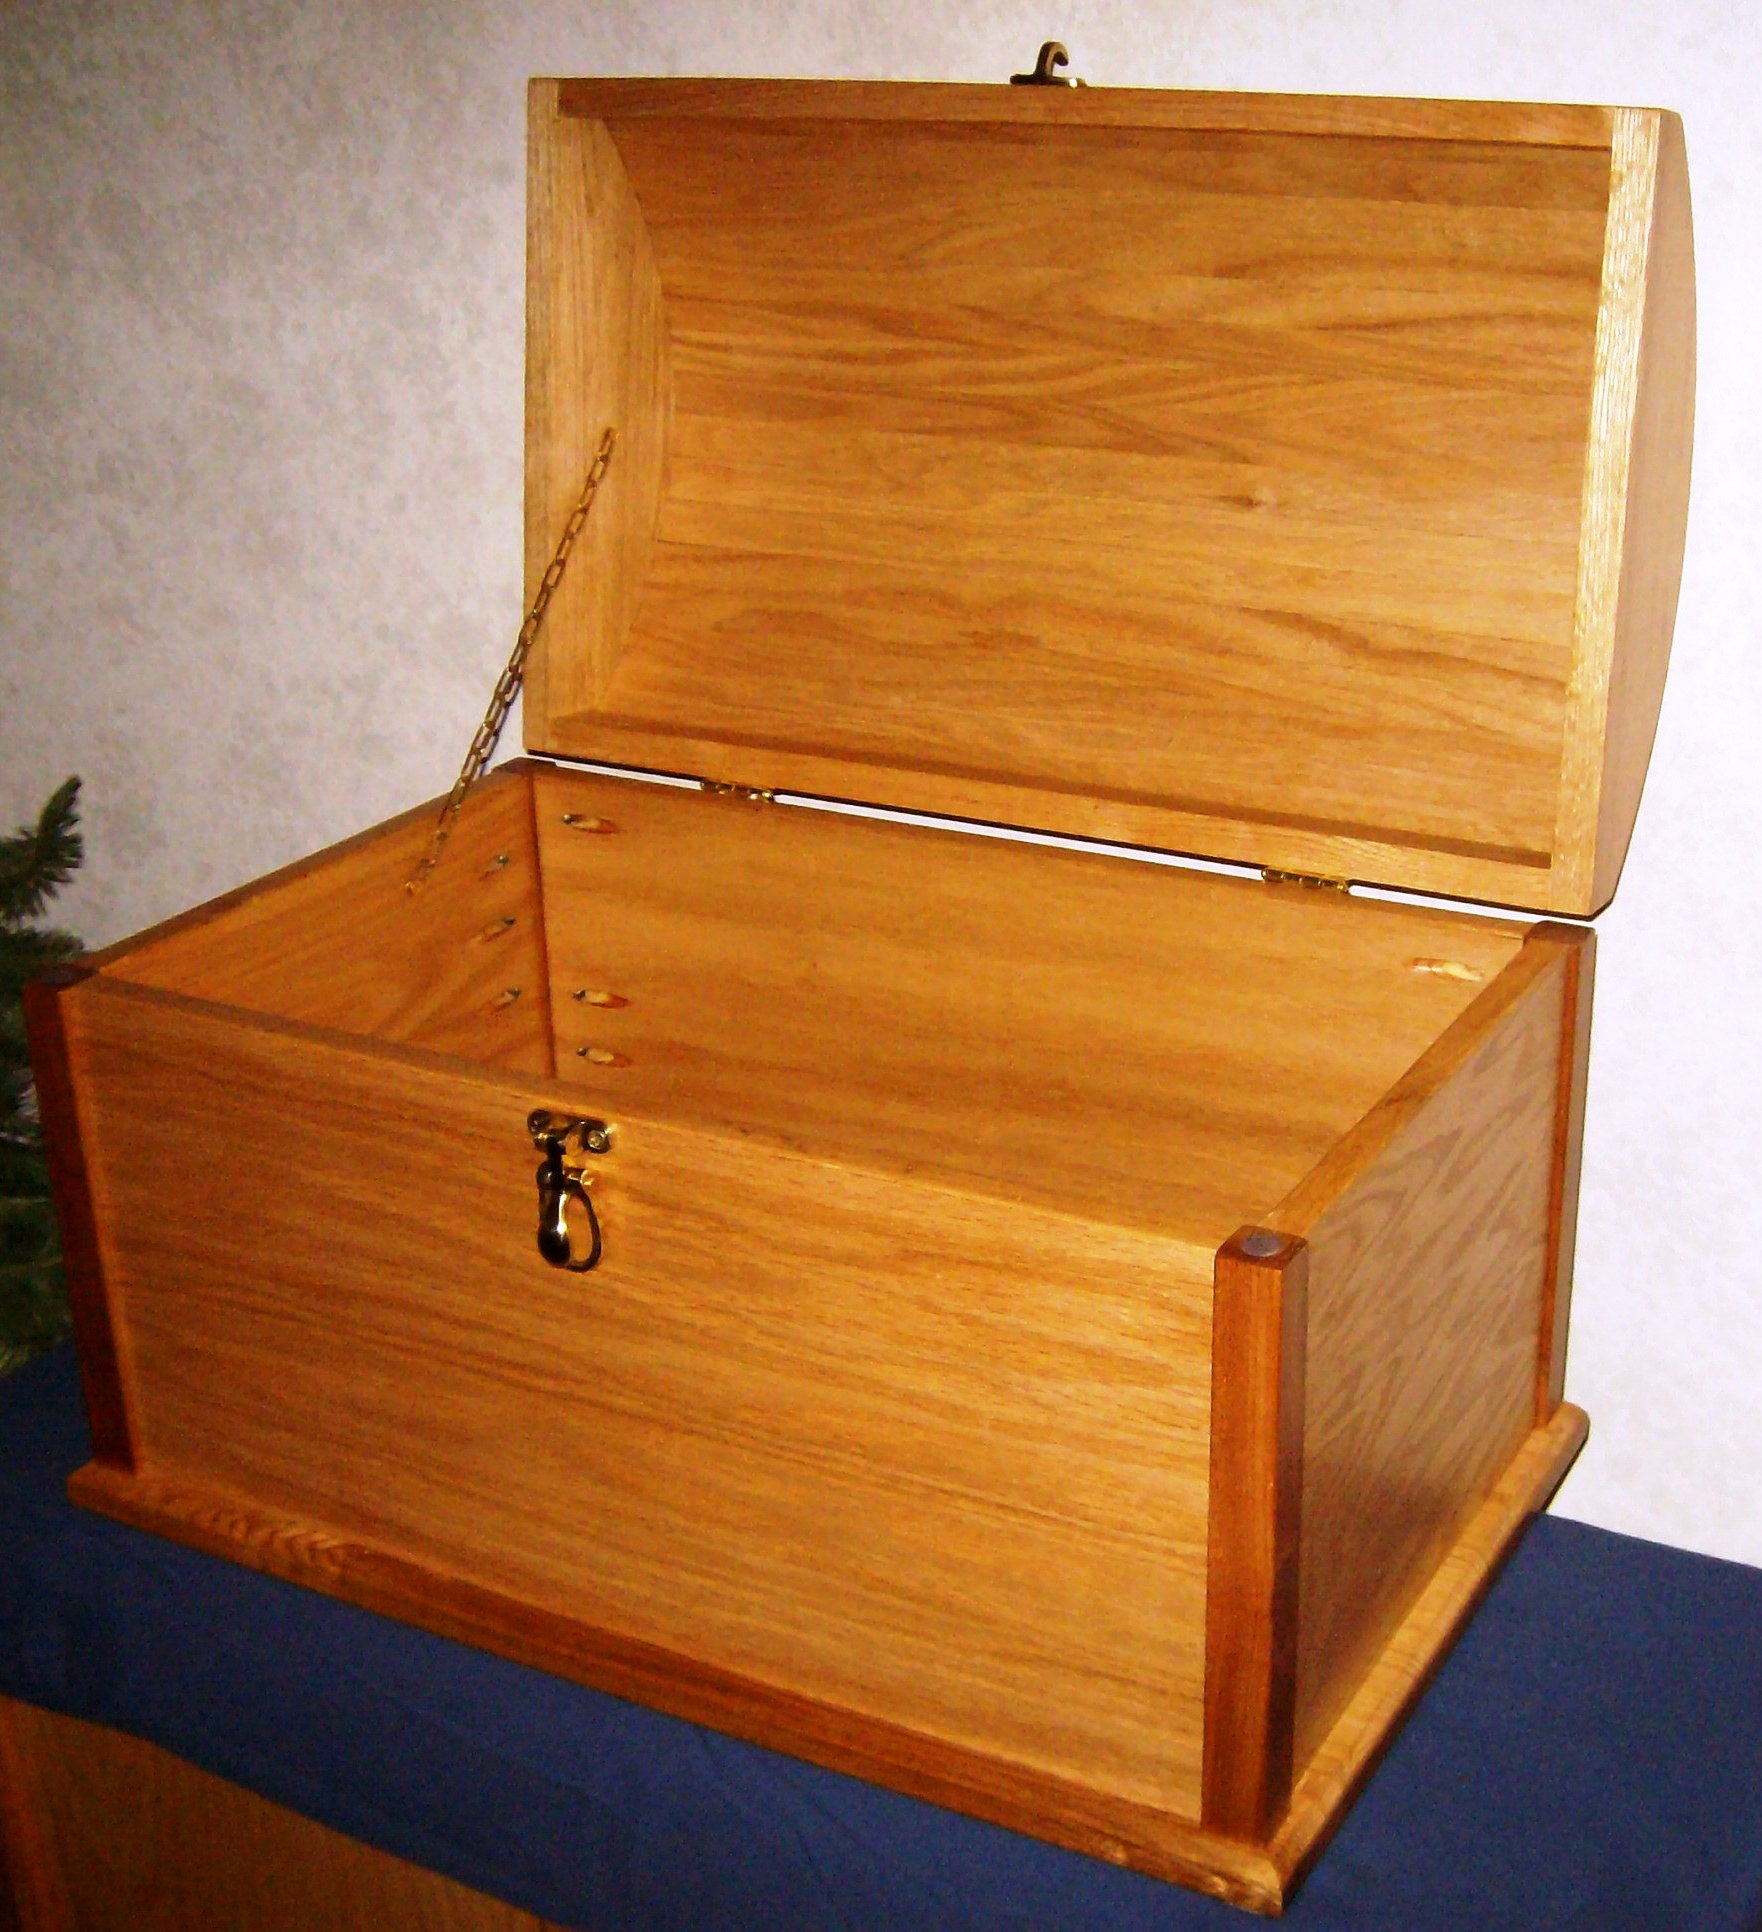 Treasure box woodworking plans